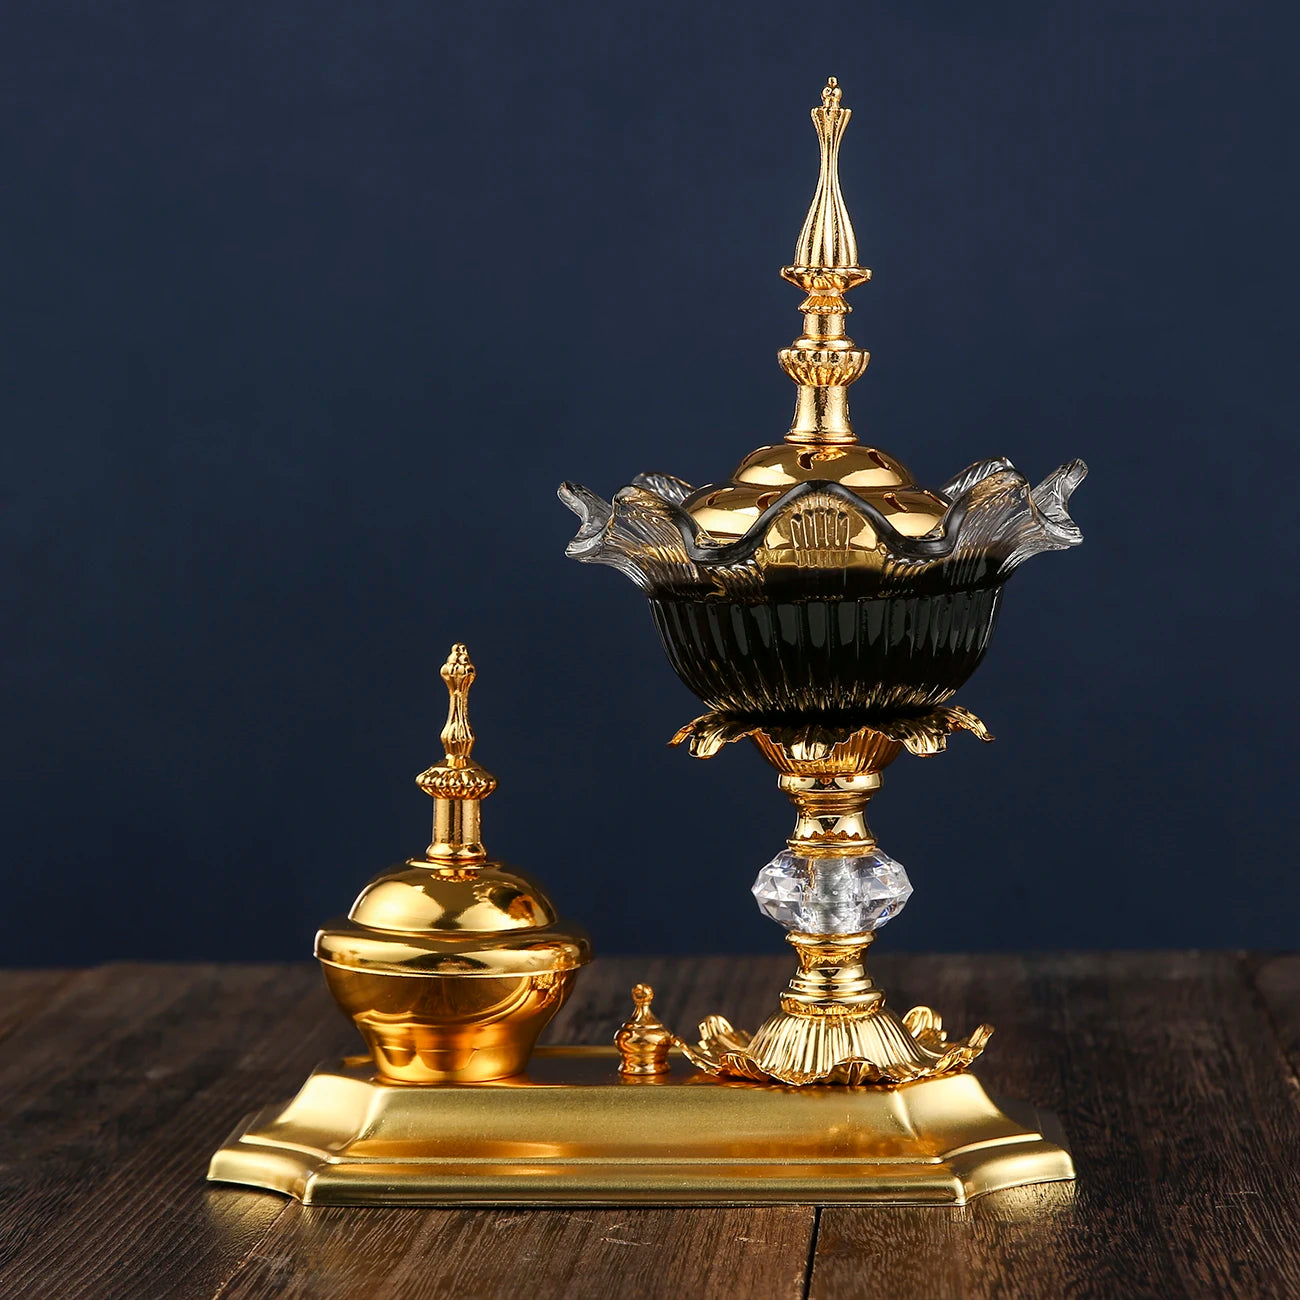 Incense Burner Holders Arabian Diffuser Bakhoor Oud Frankincense Cone Charcoa Home Decor for Yoga Spa Arom Christmas Gift Censer